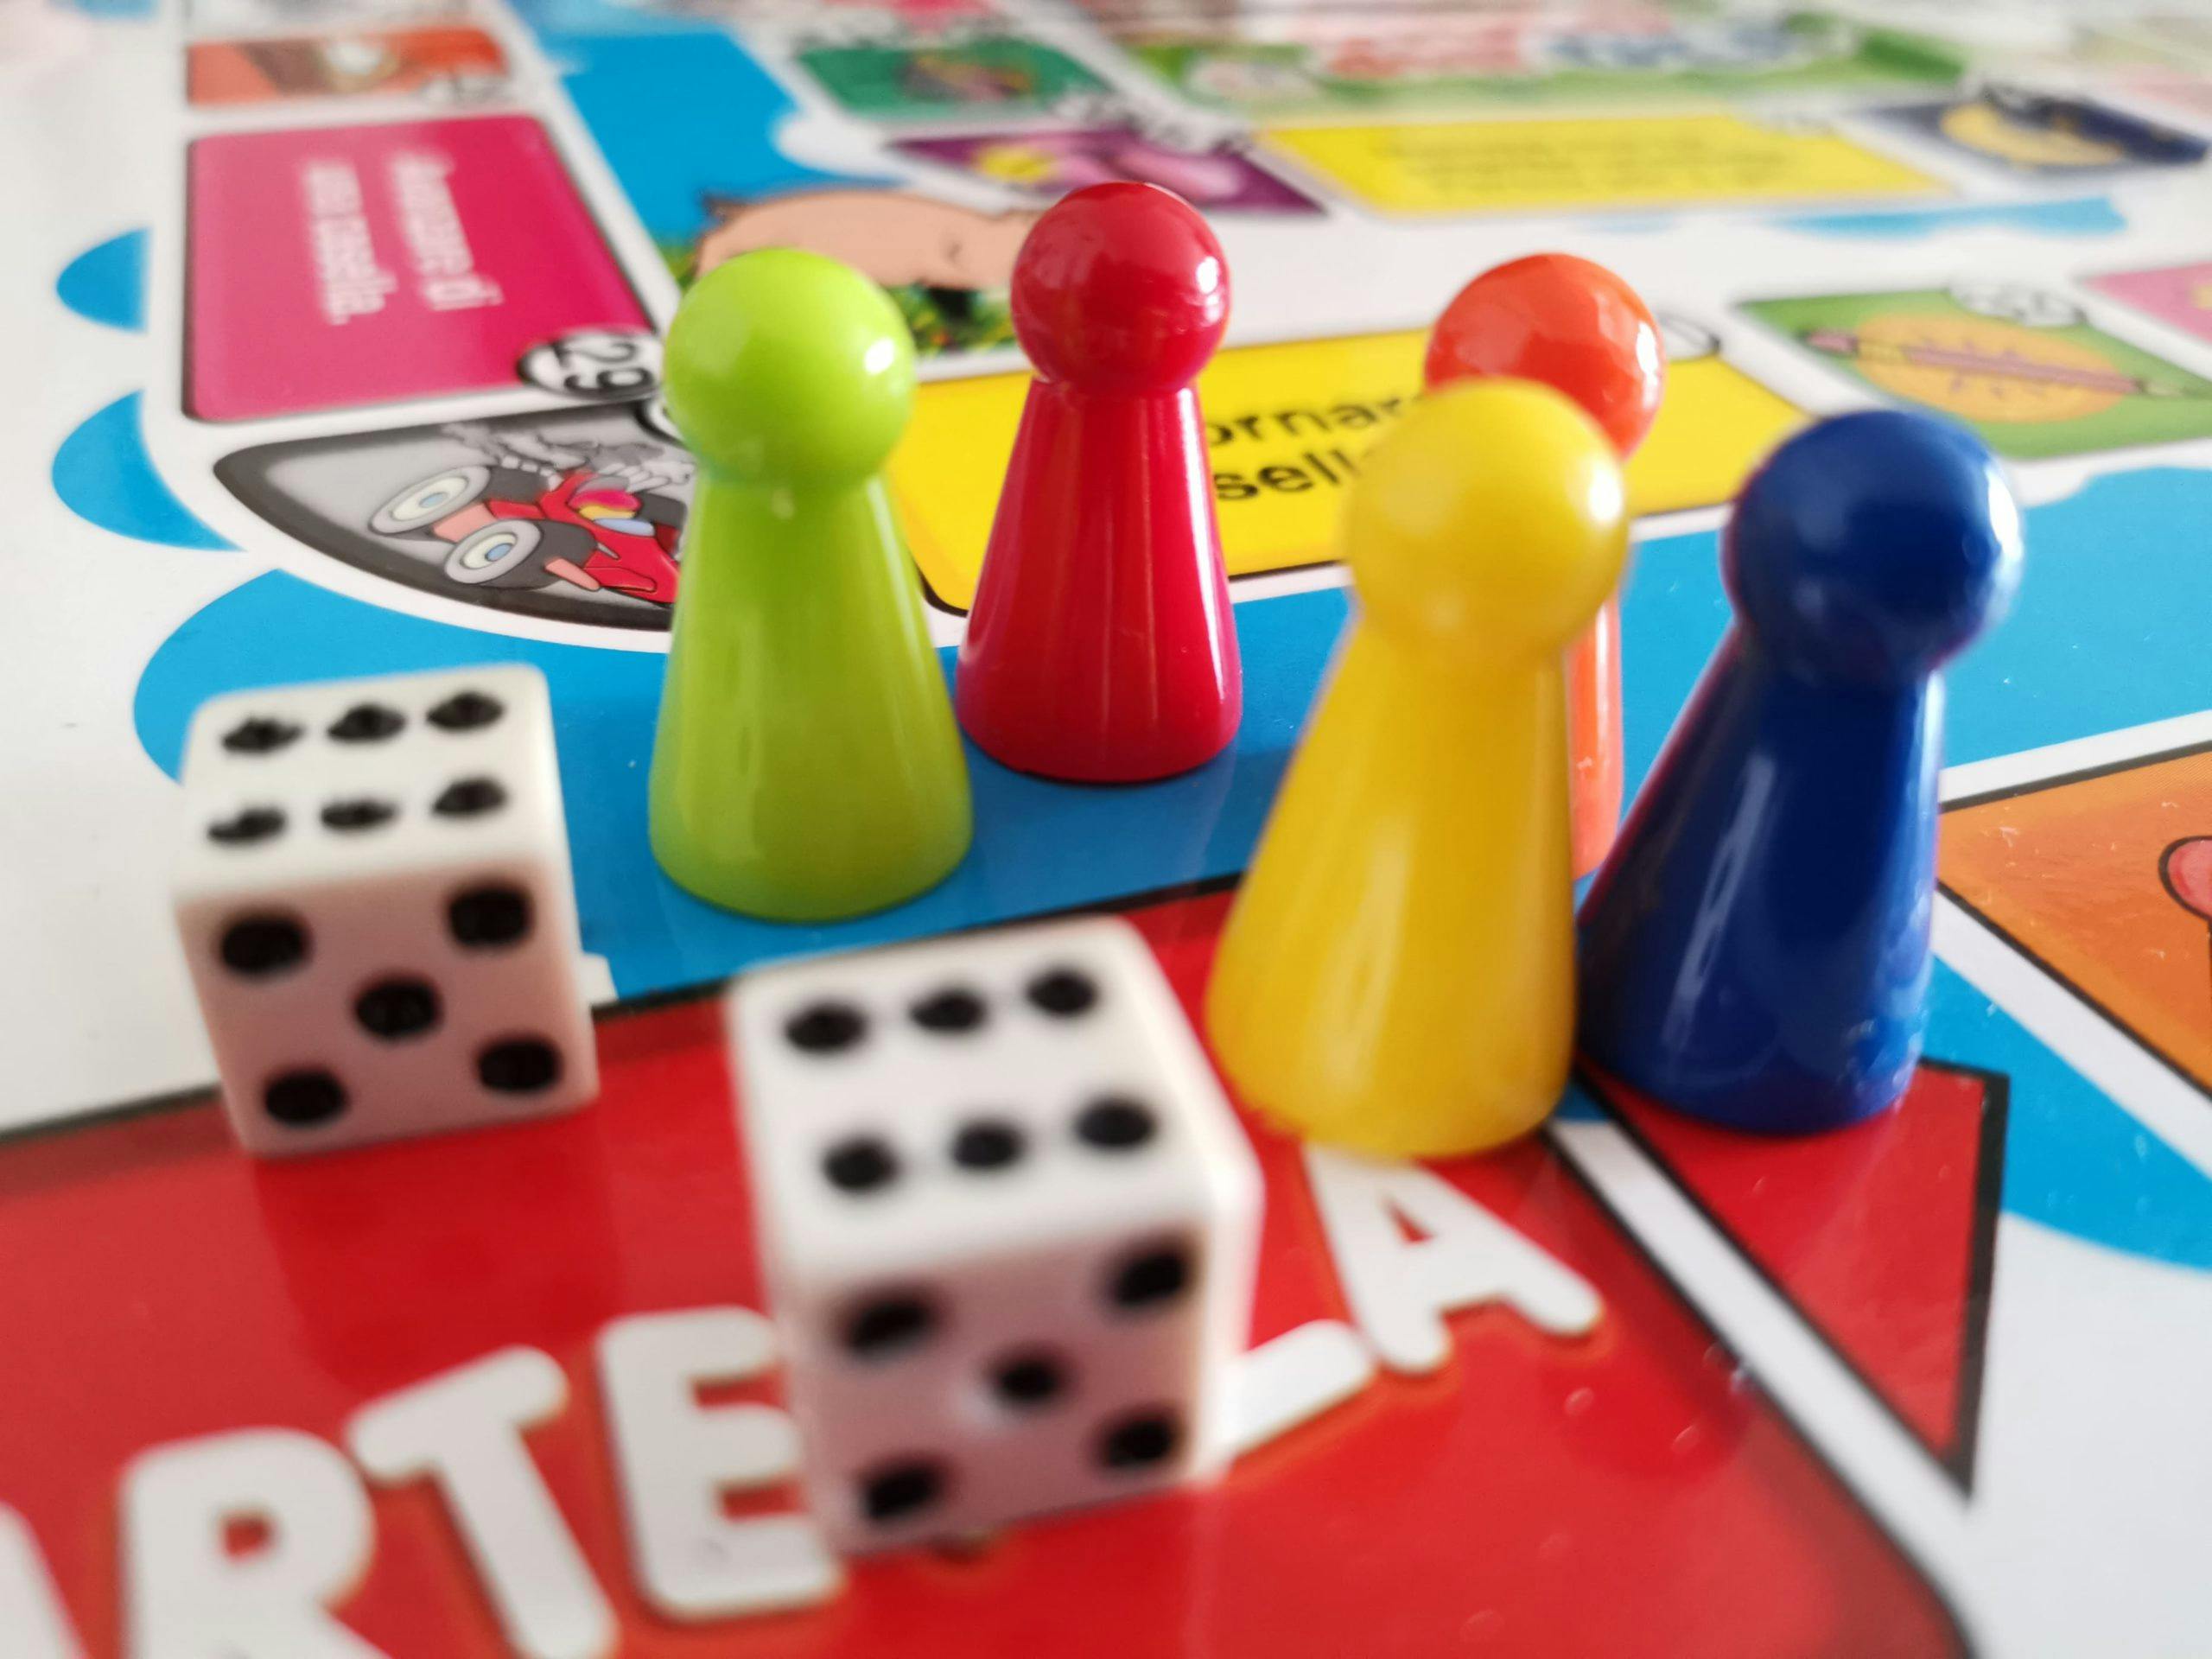 Six Board Game Cafe 🎲 Local de Juegos de Mesa